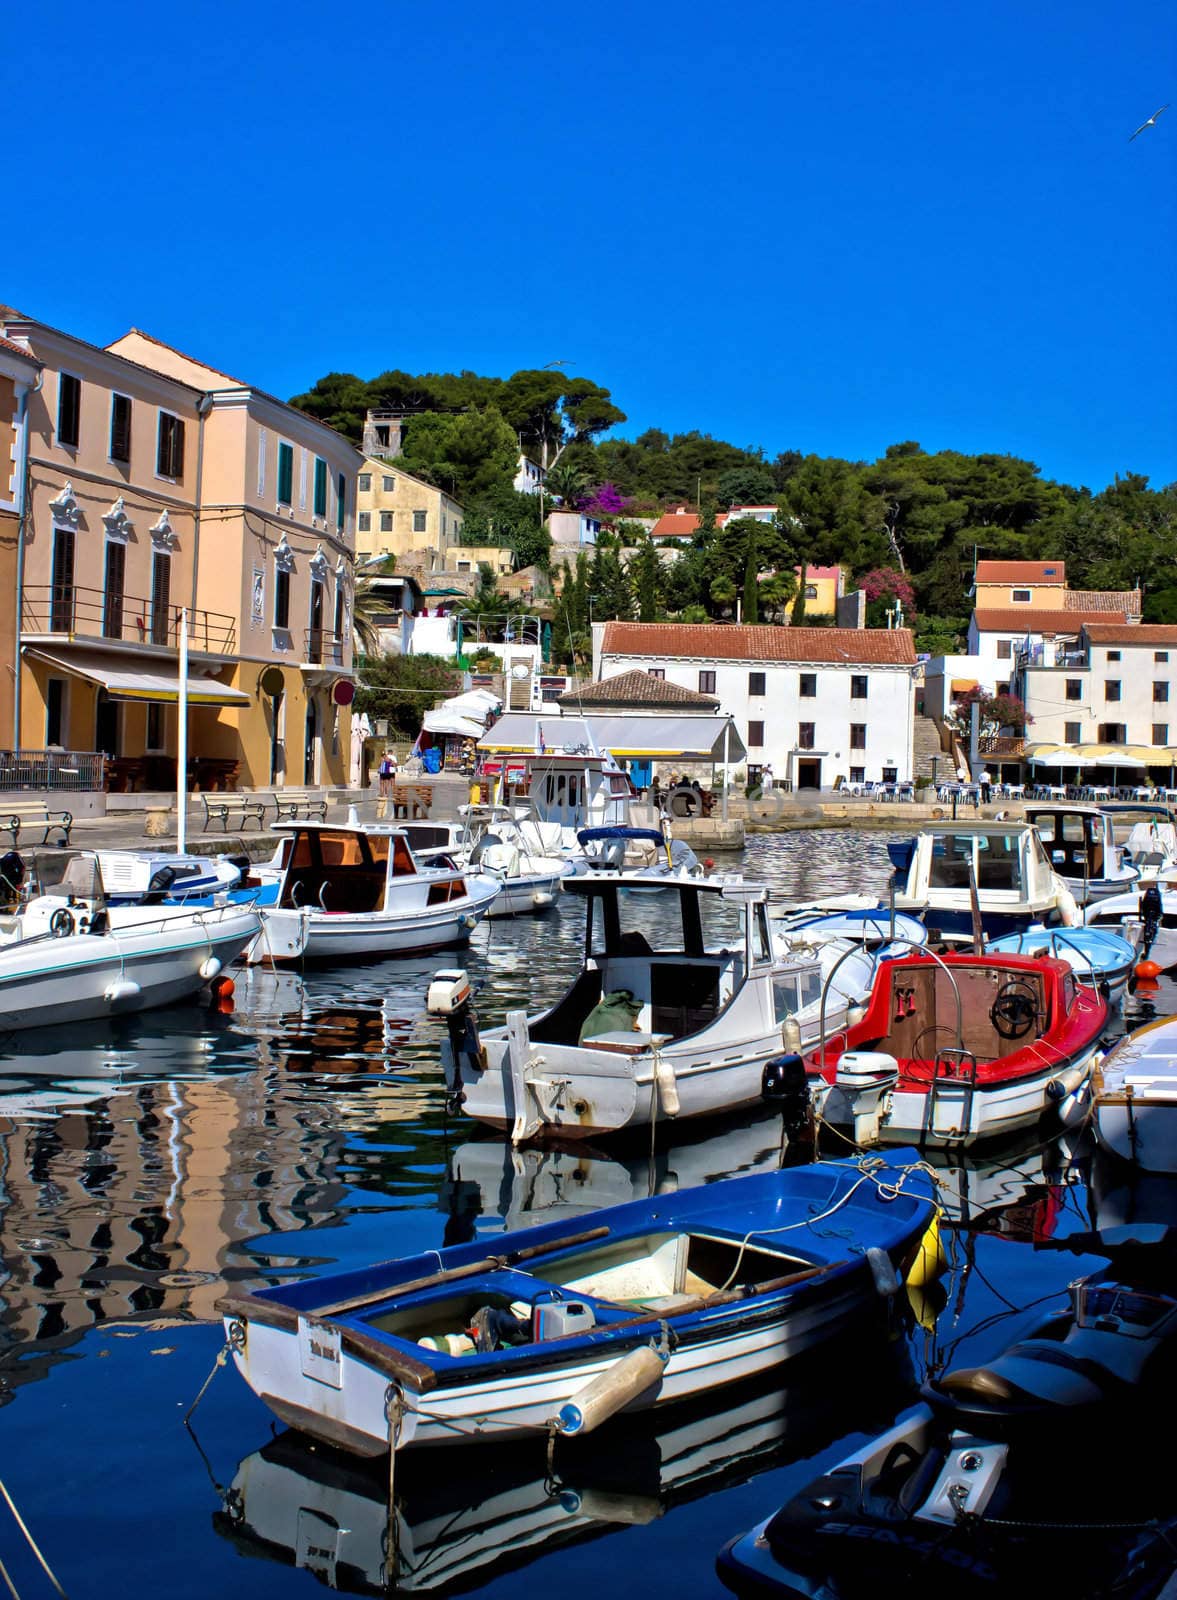 Adriatic town of Veli Losinj harbor by xbrchx